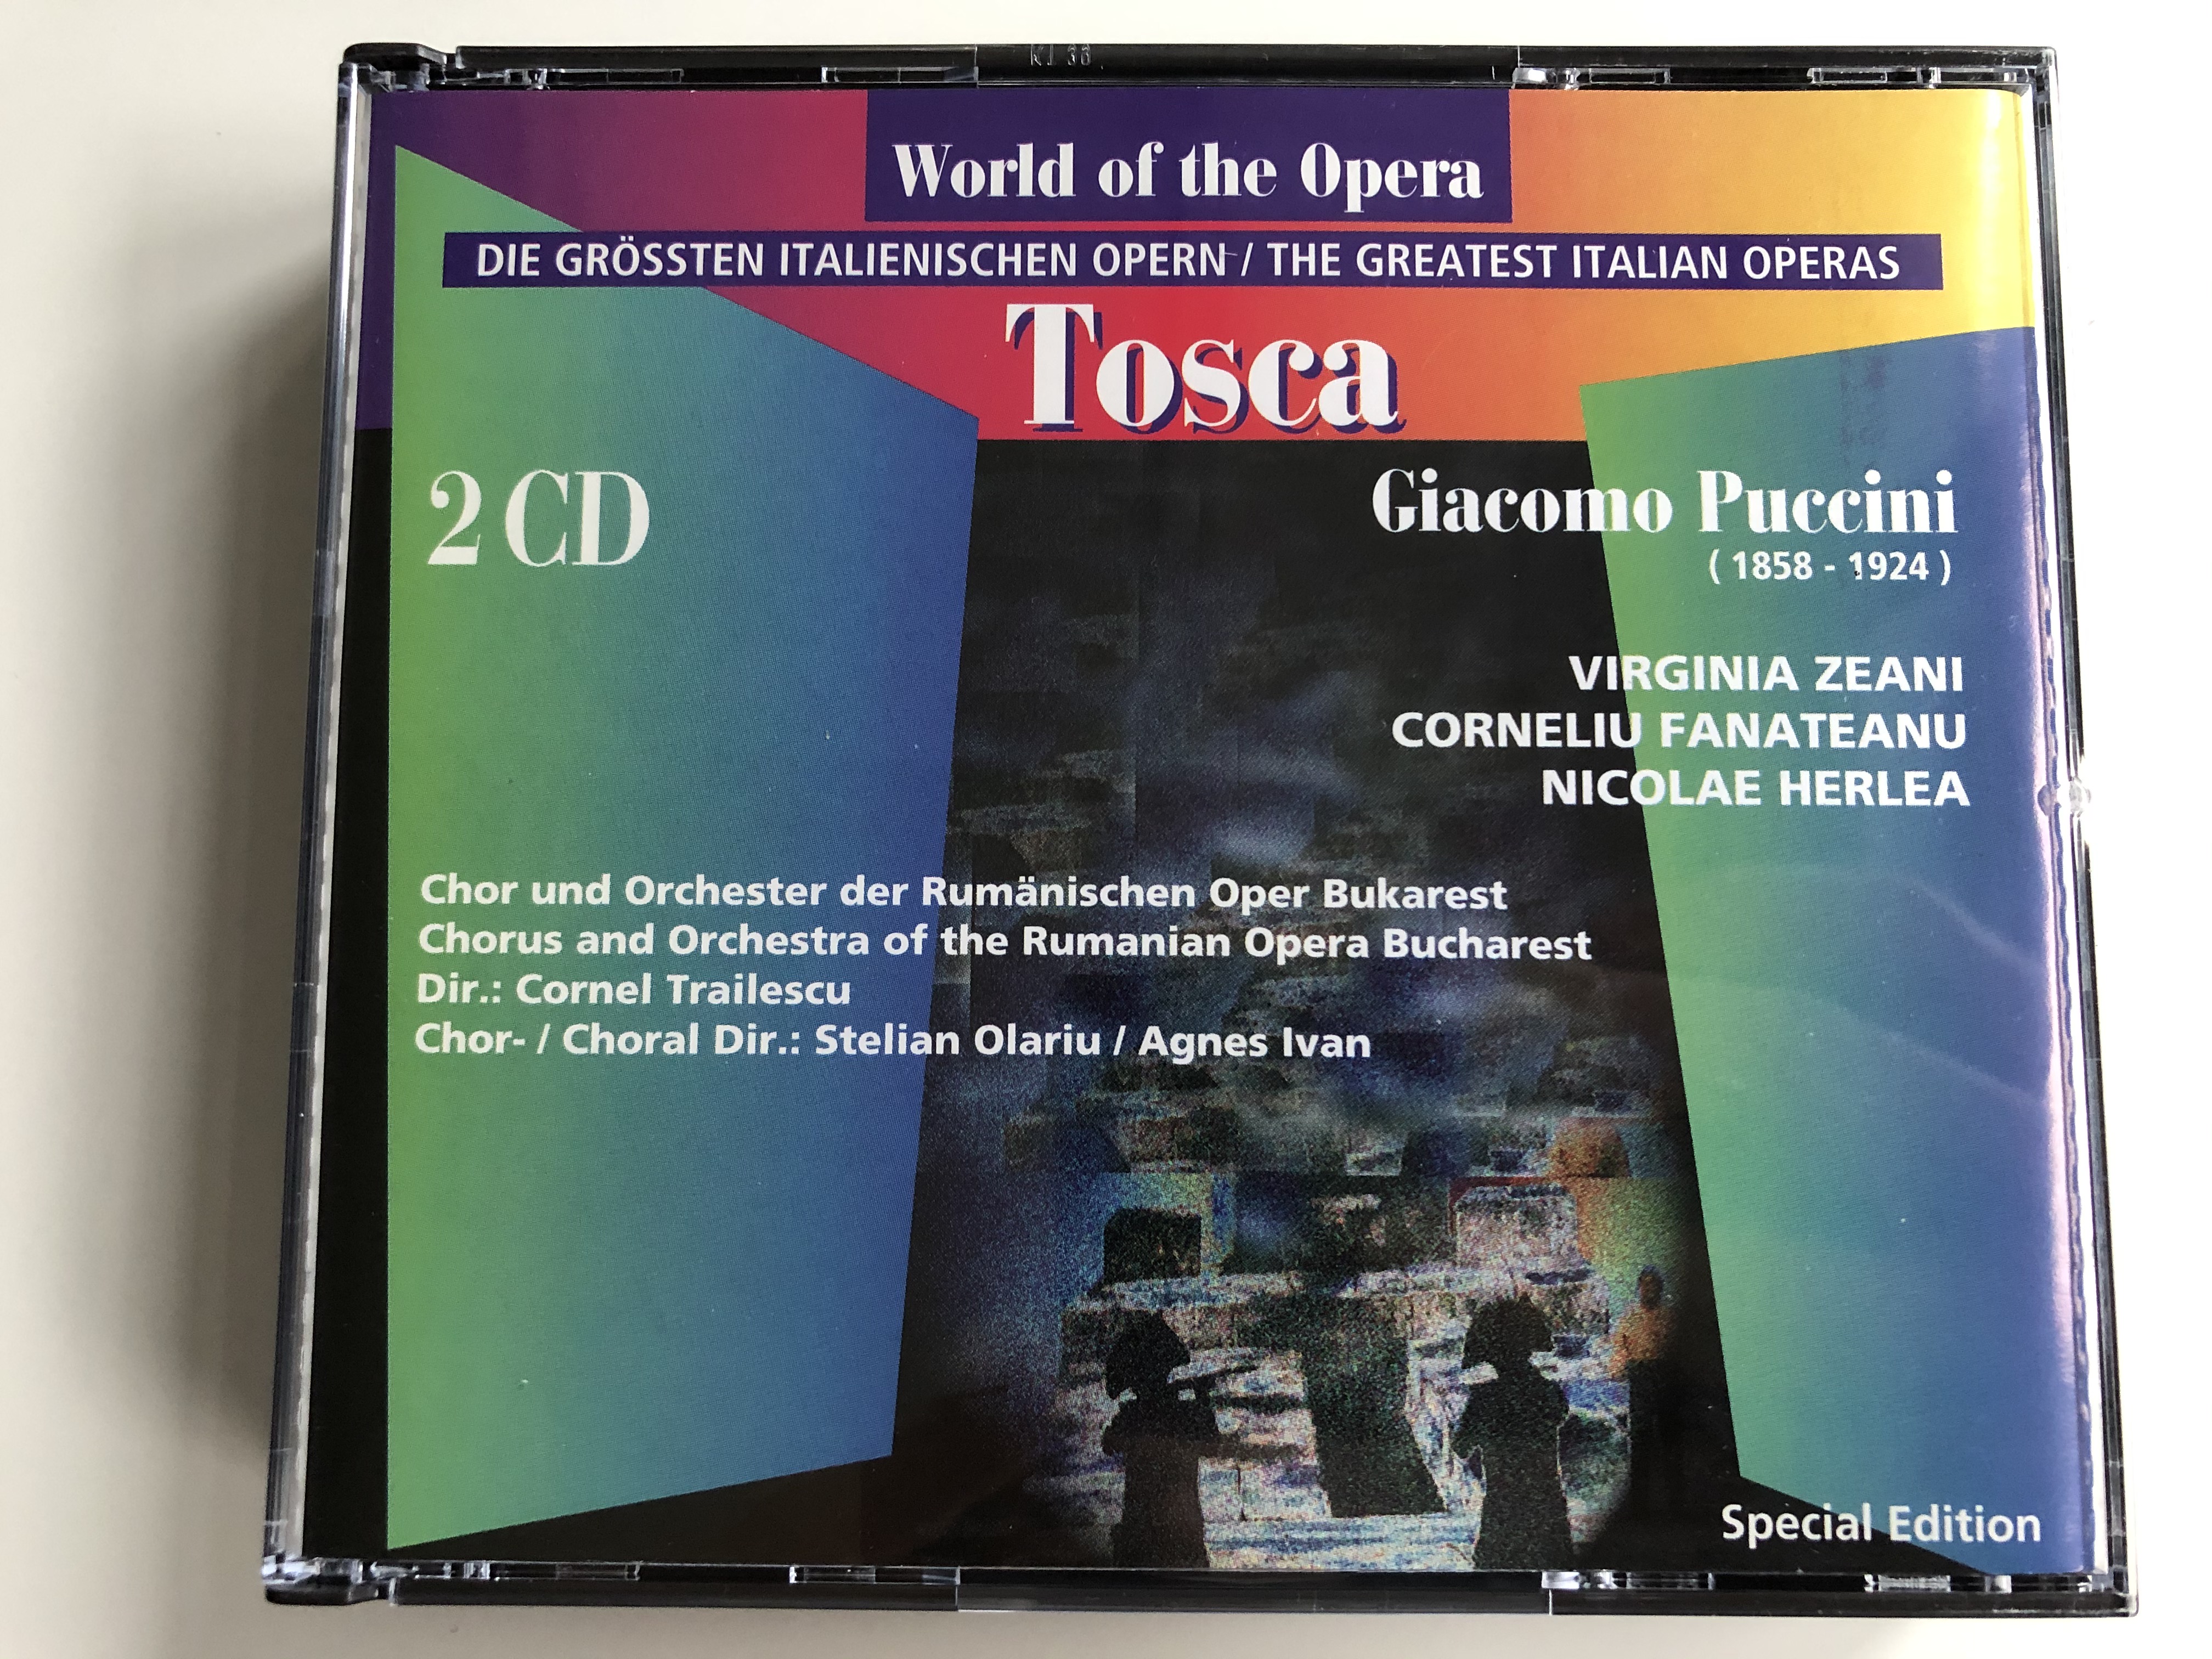 the-greatest-italian-operas-tosca-giacomo-puccini-1858-1924-virginia-zeani-corneliu-fanateanu-nicolae-herlea-chorus-and-orchestra-of-the-rumanian-opera-bucharest-dir-cornel-trailescu-ch-1-.jpg